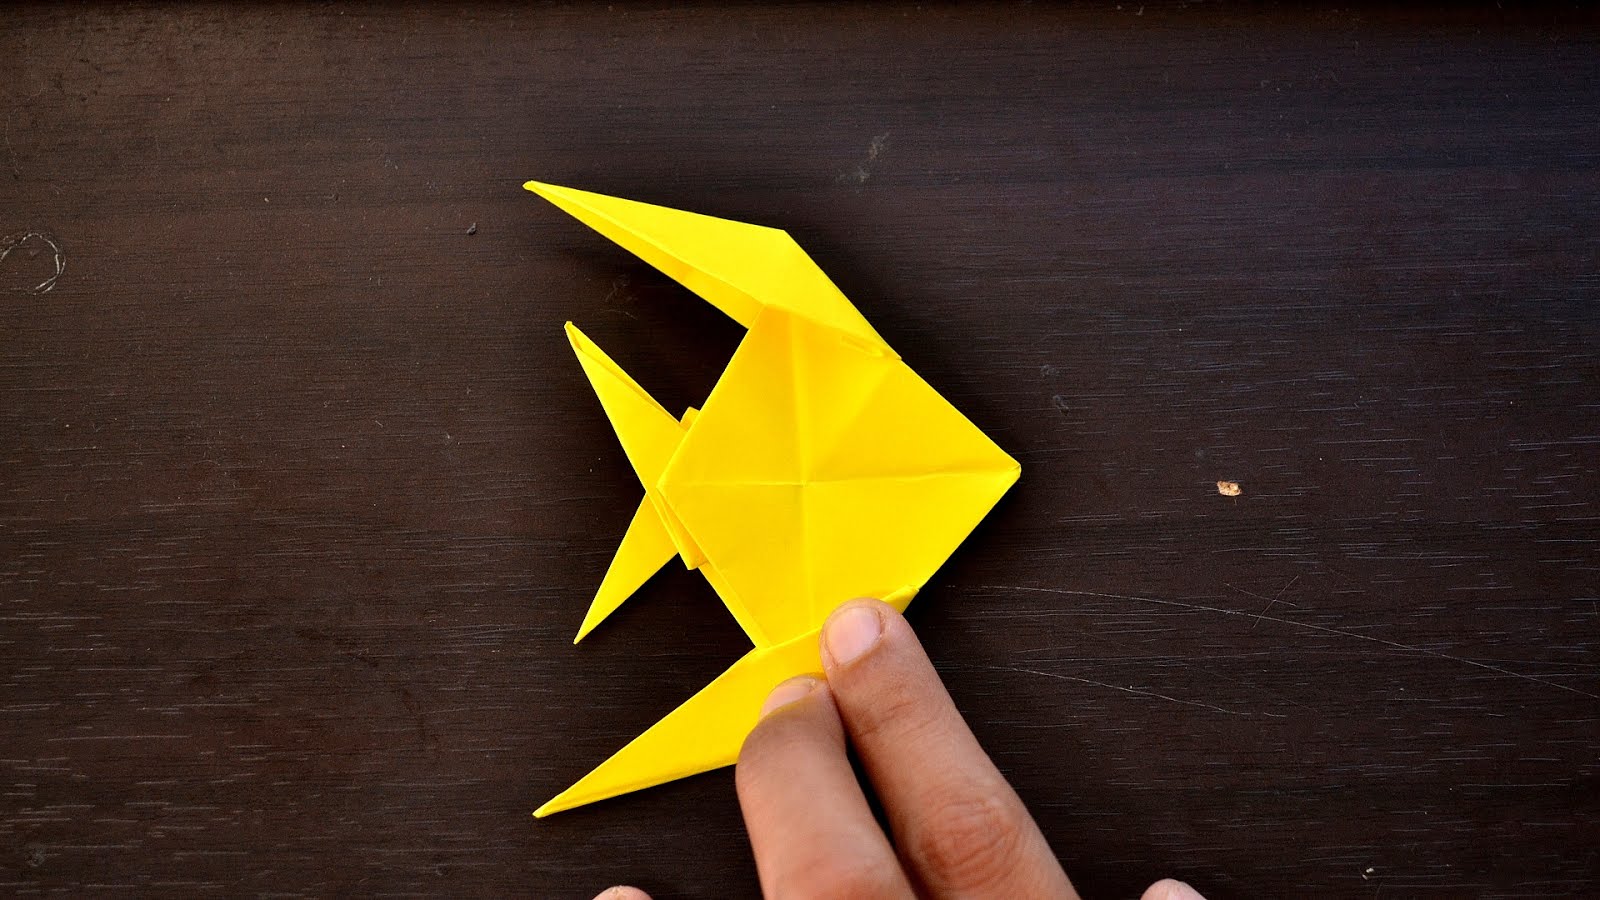 Origami Design Definition